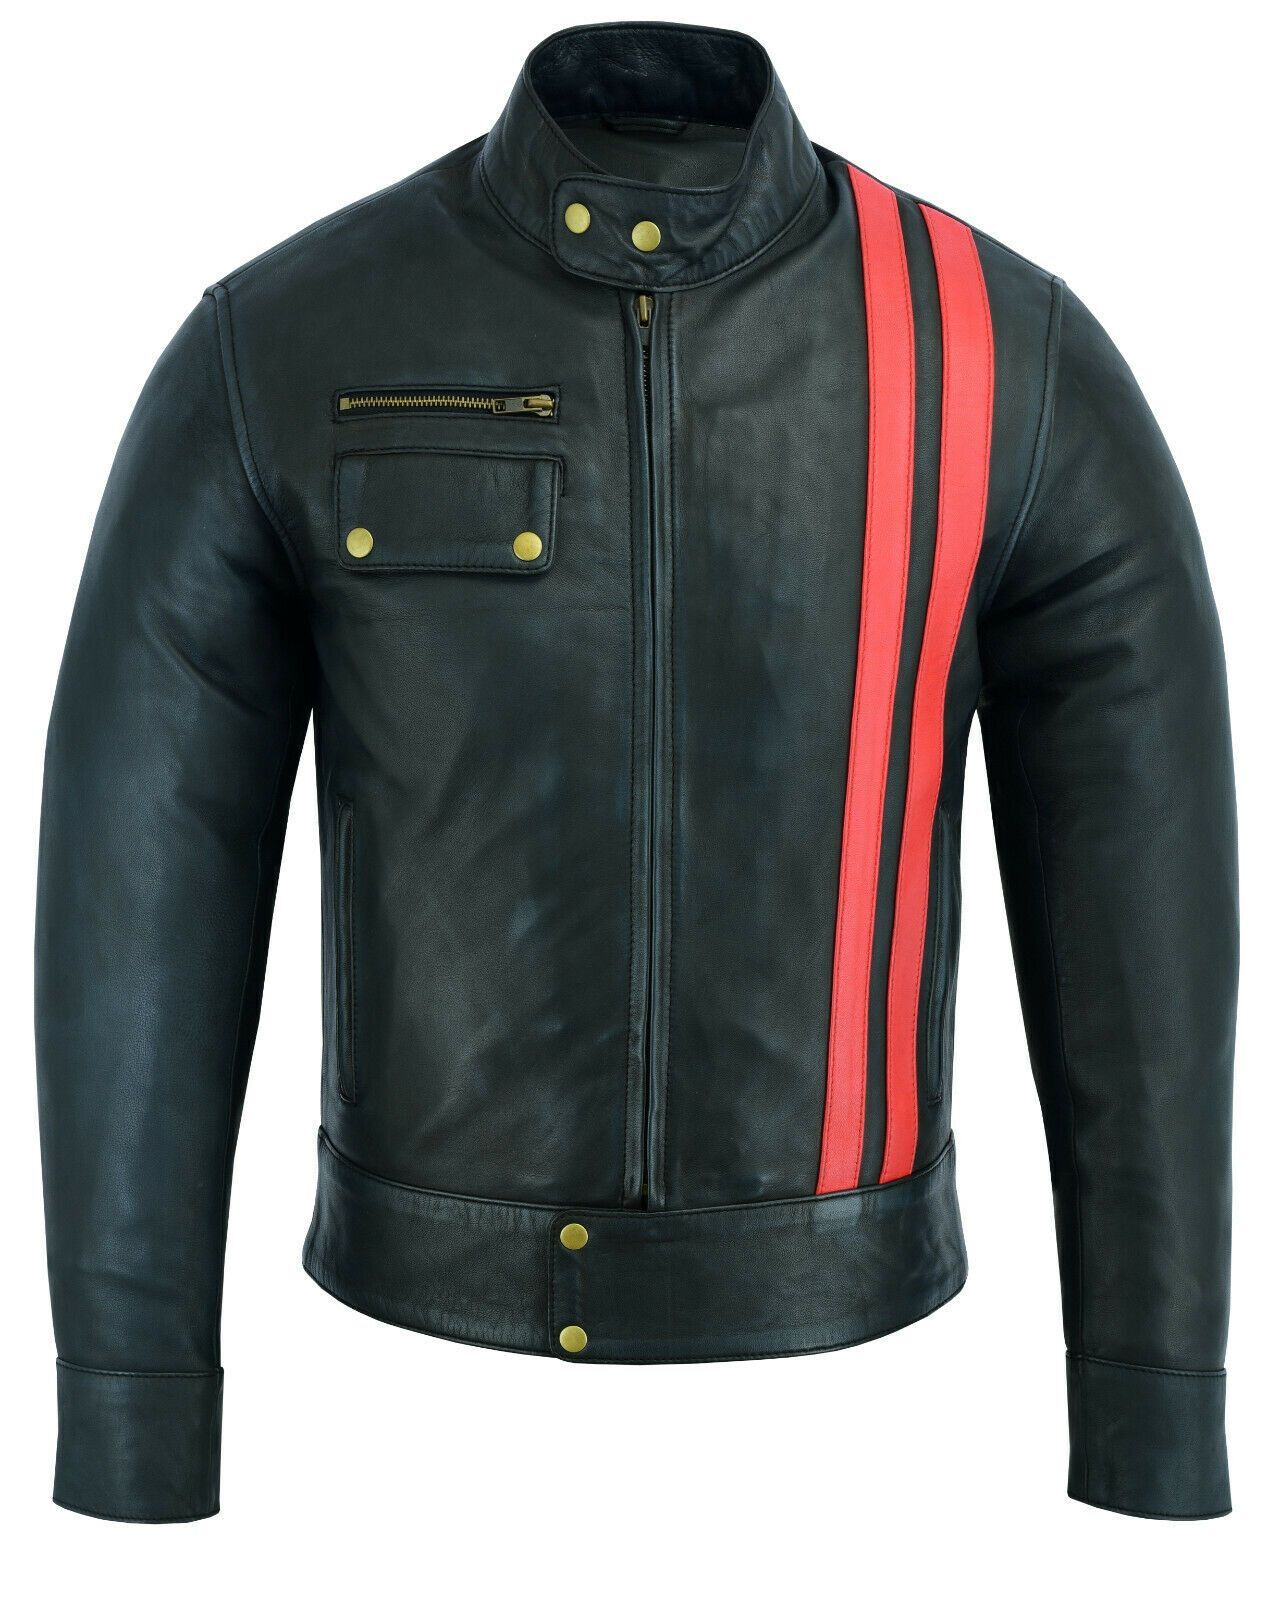 Black Smart Cafe Racer Retro Style Red Striped Biker Leather Jacket Motorcycle